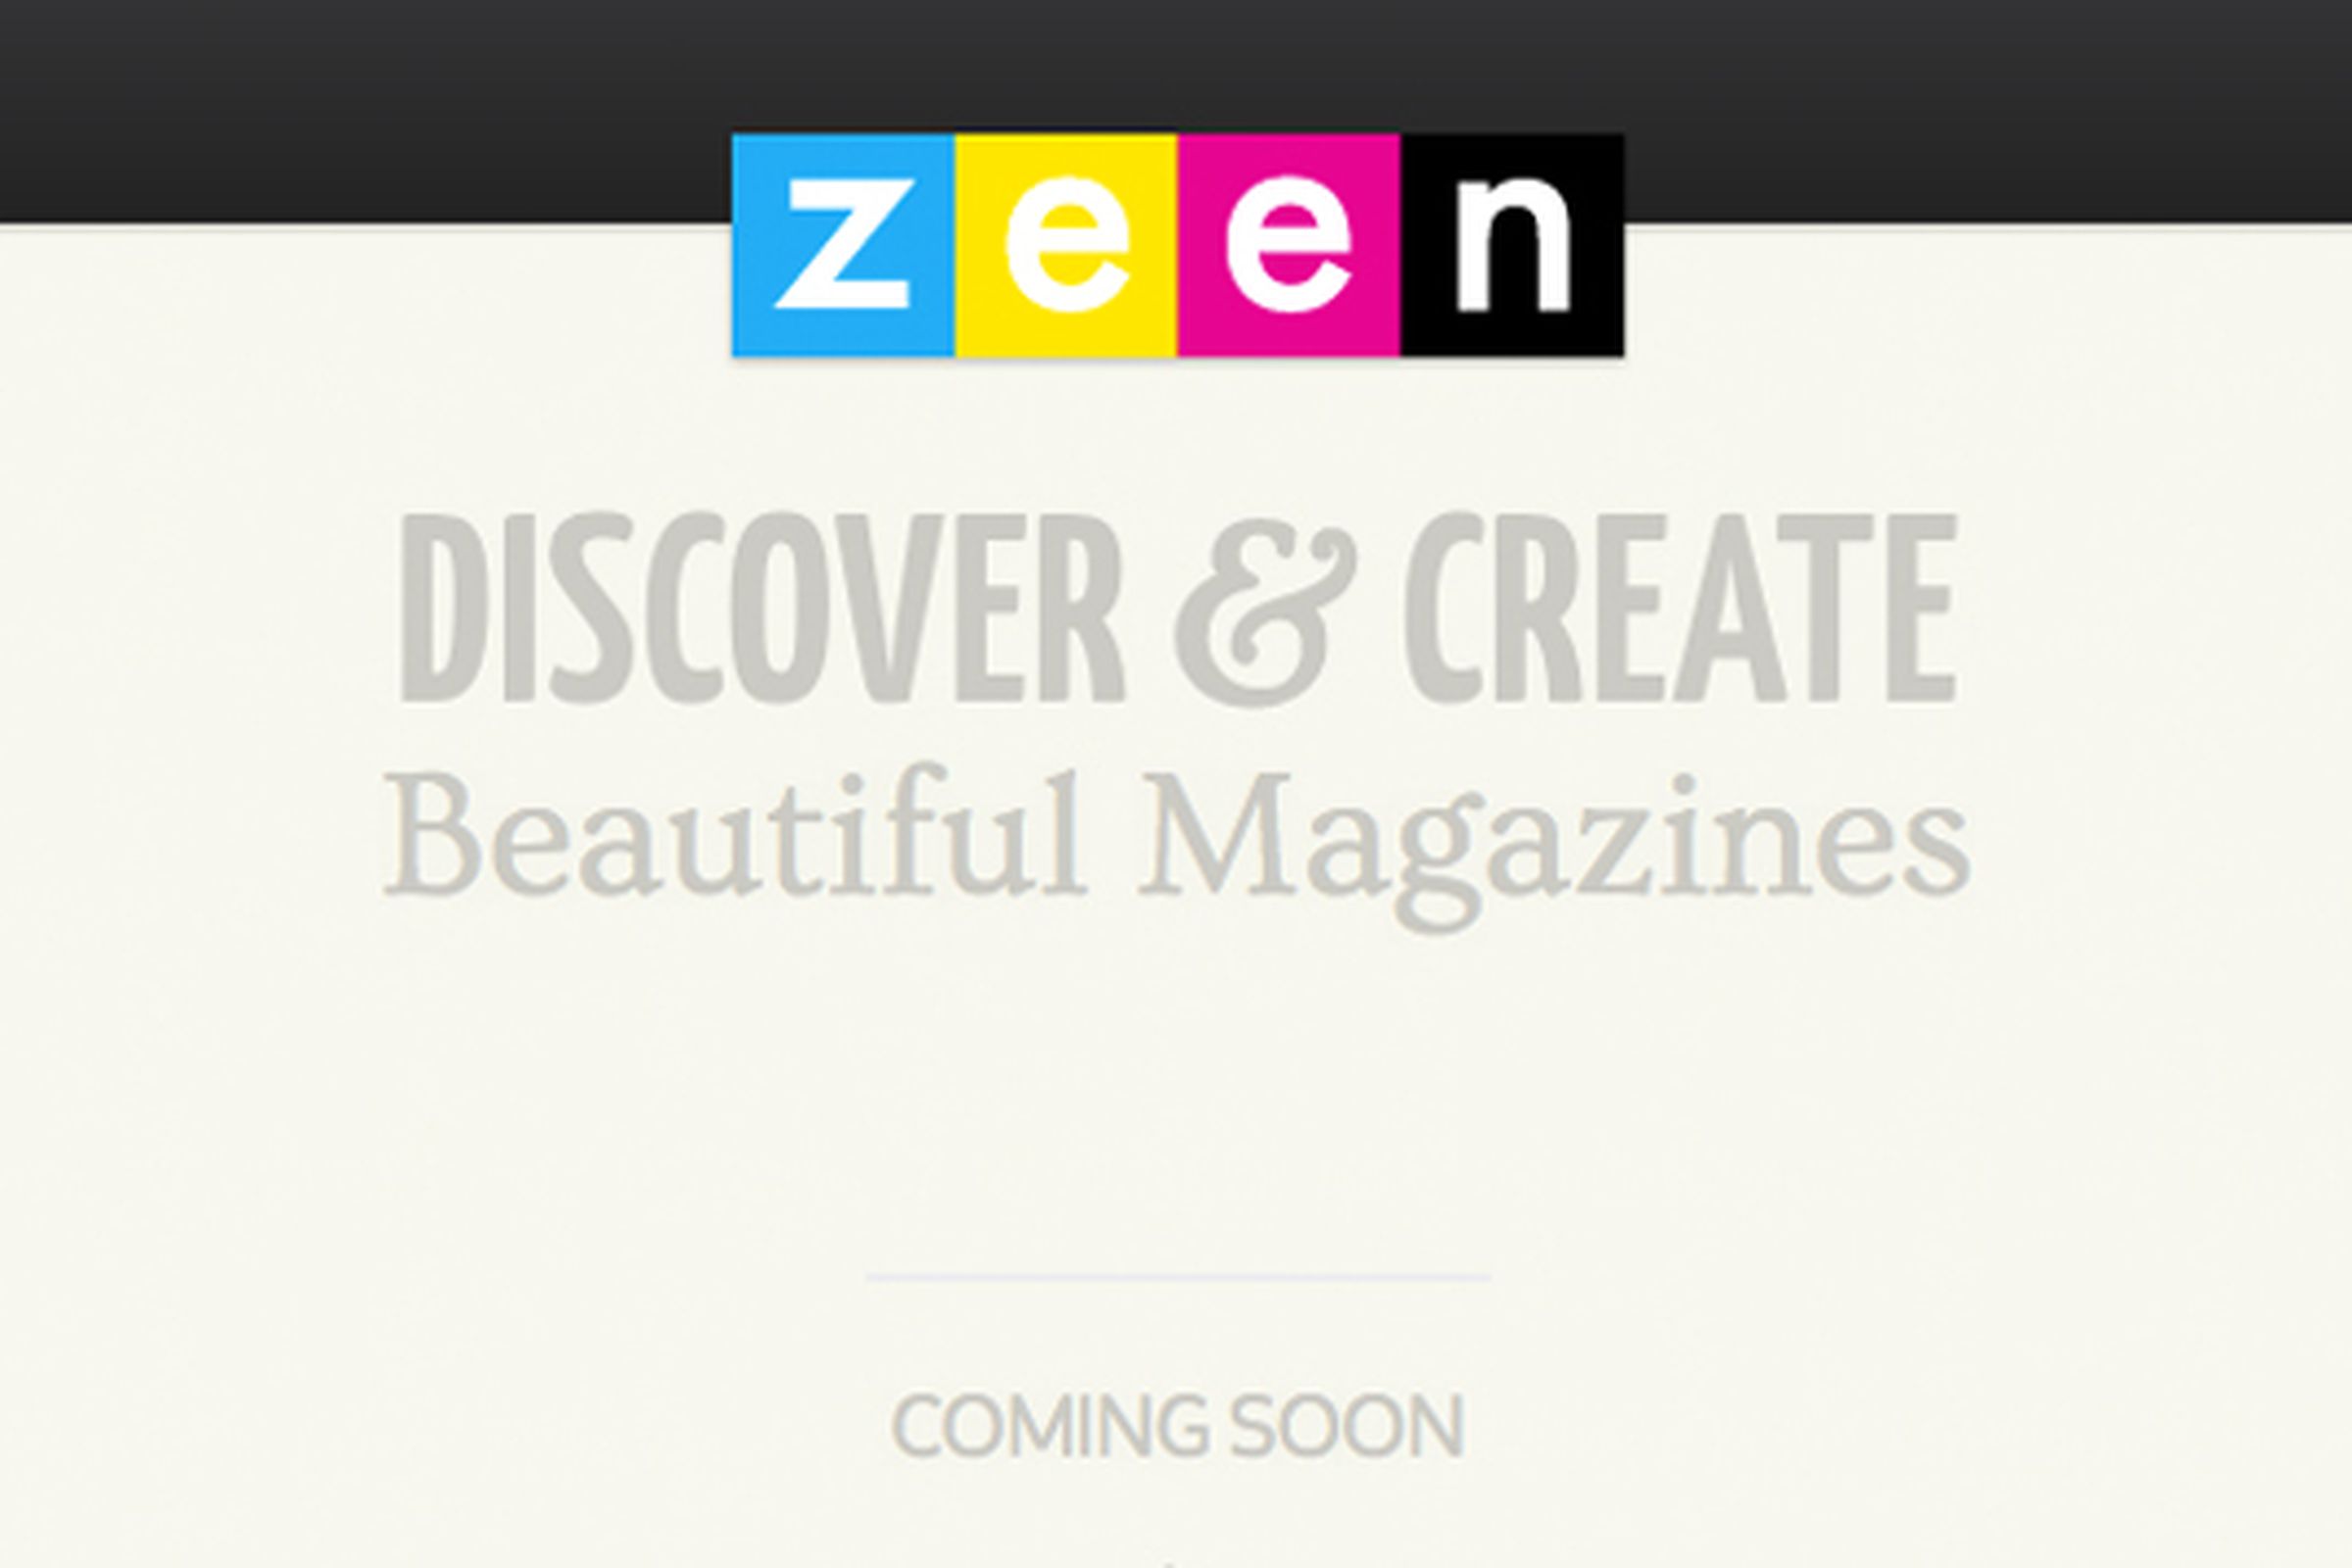 Zeen logo and splash page